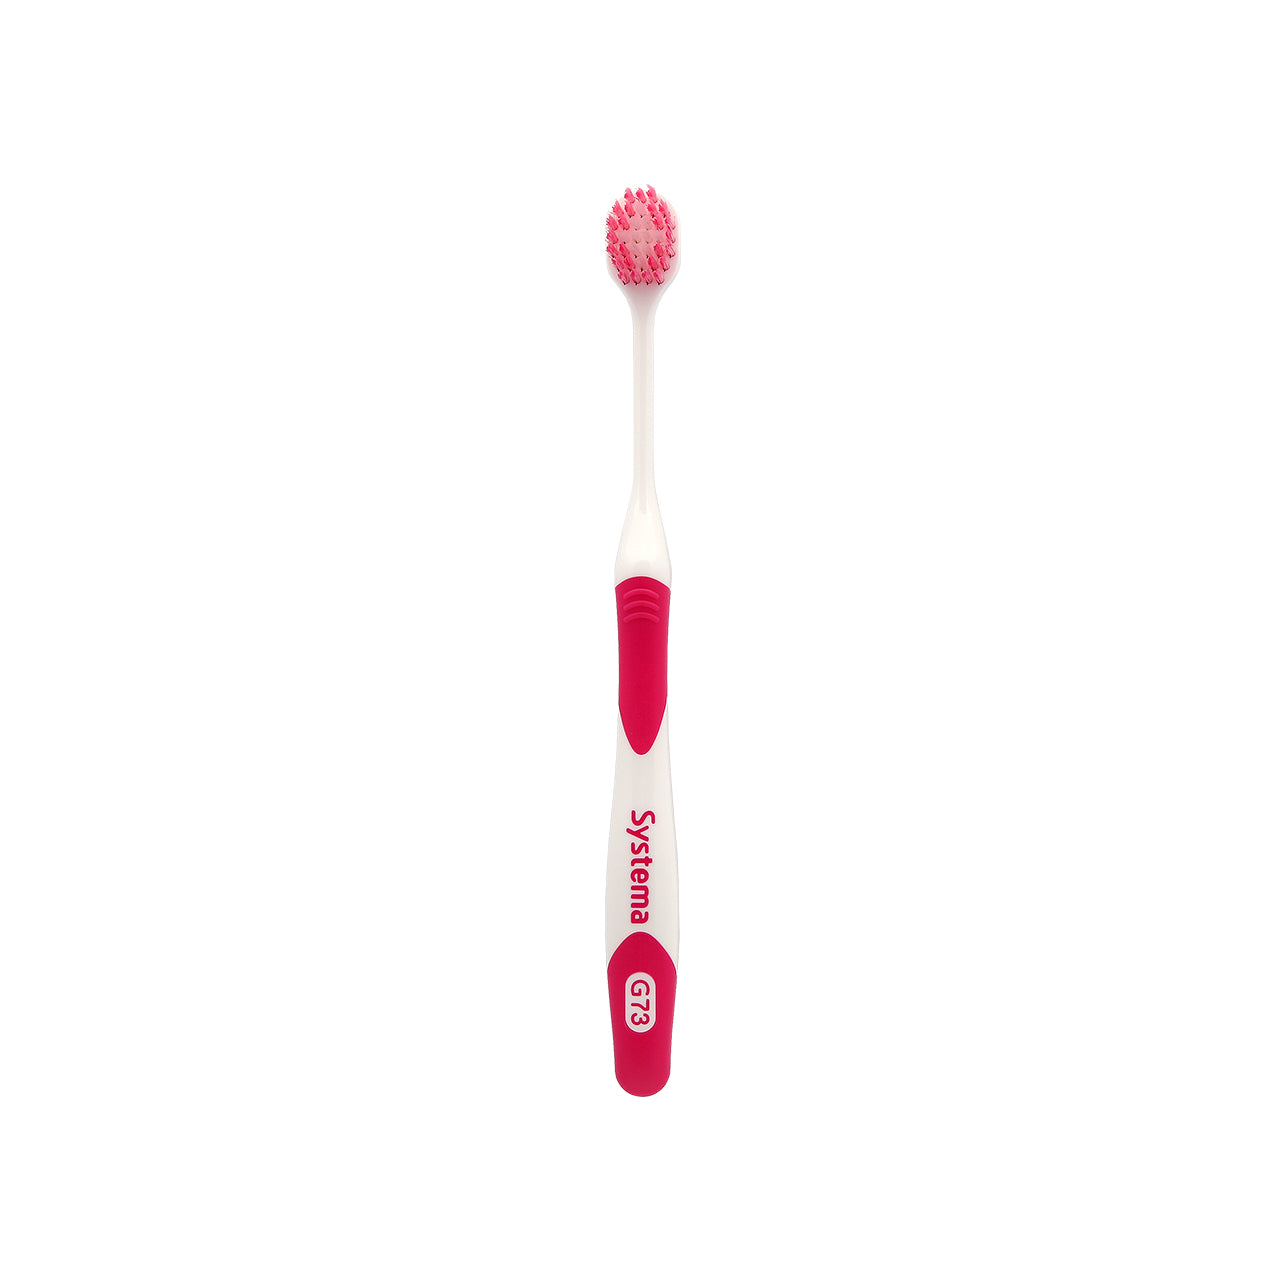 Lion Systema Wide High Density Toothbrush G73 Soft 1pc | Sasa Global eShop